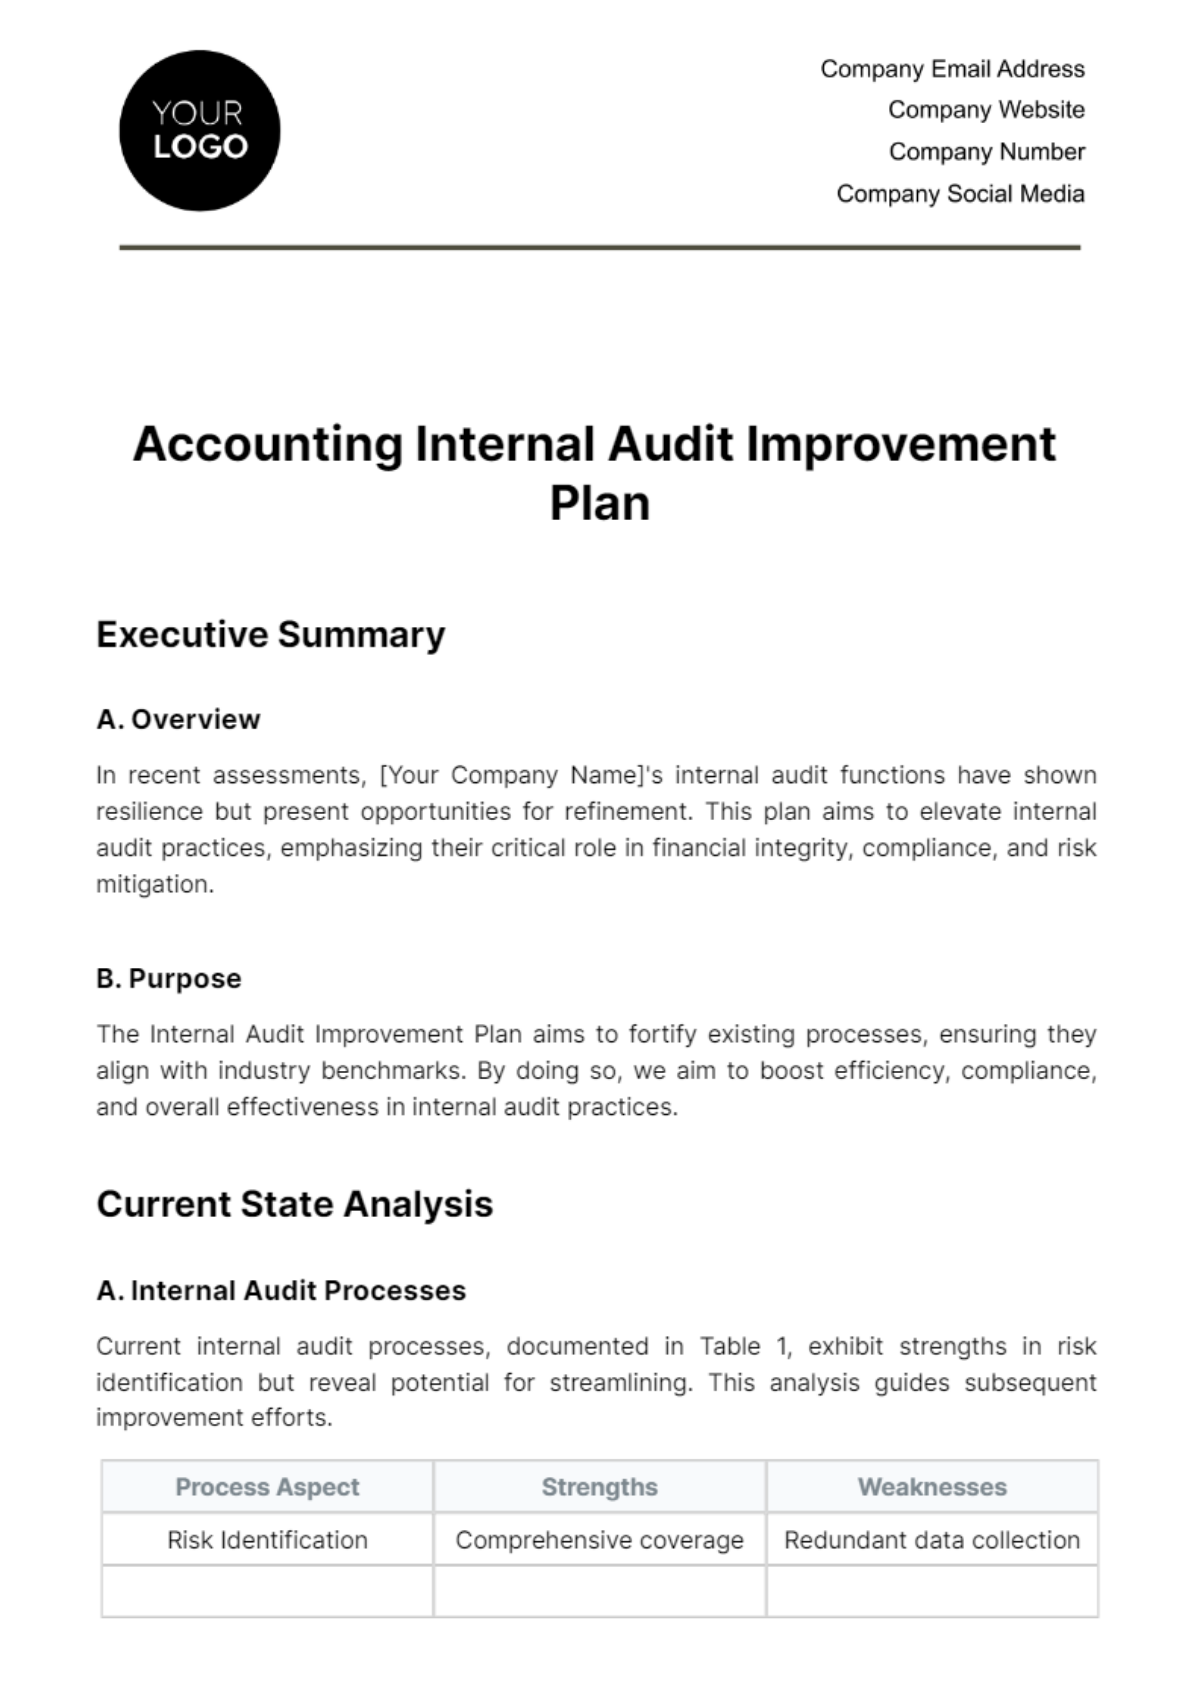 Free Accounting Internal Audit Improvement Plan Template